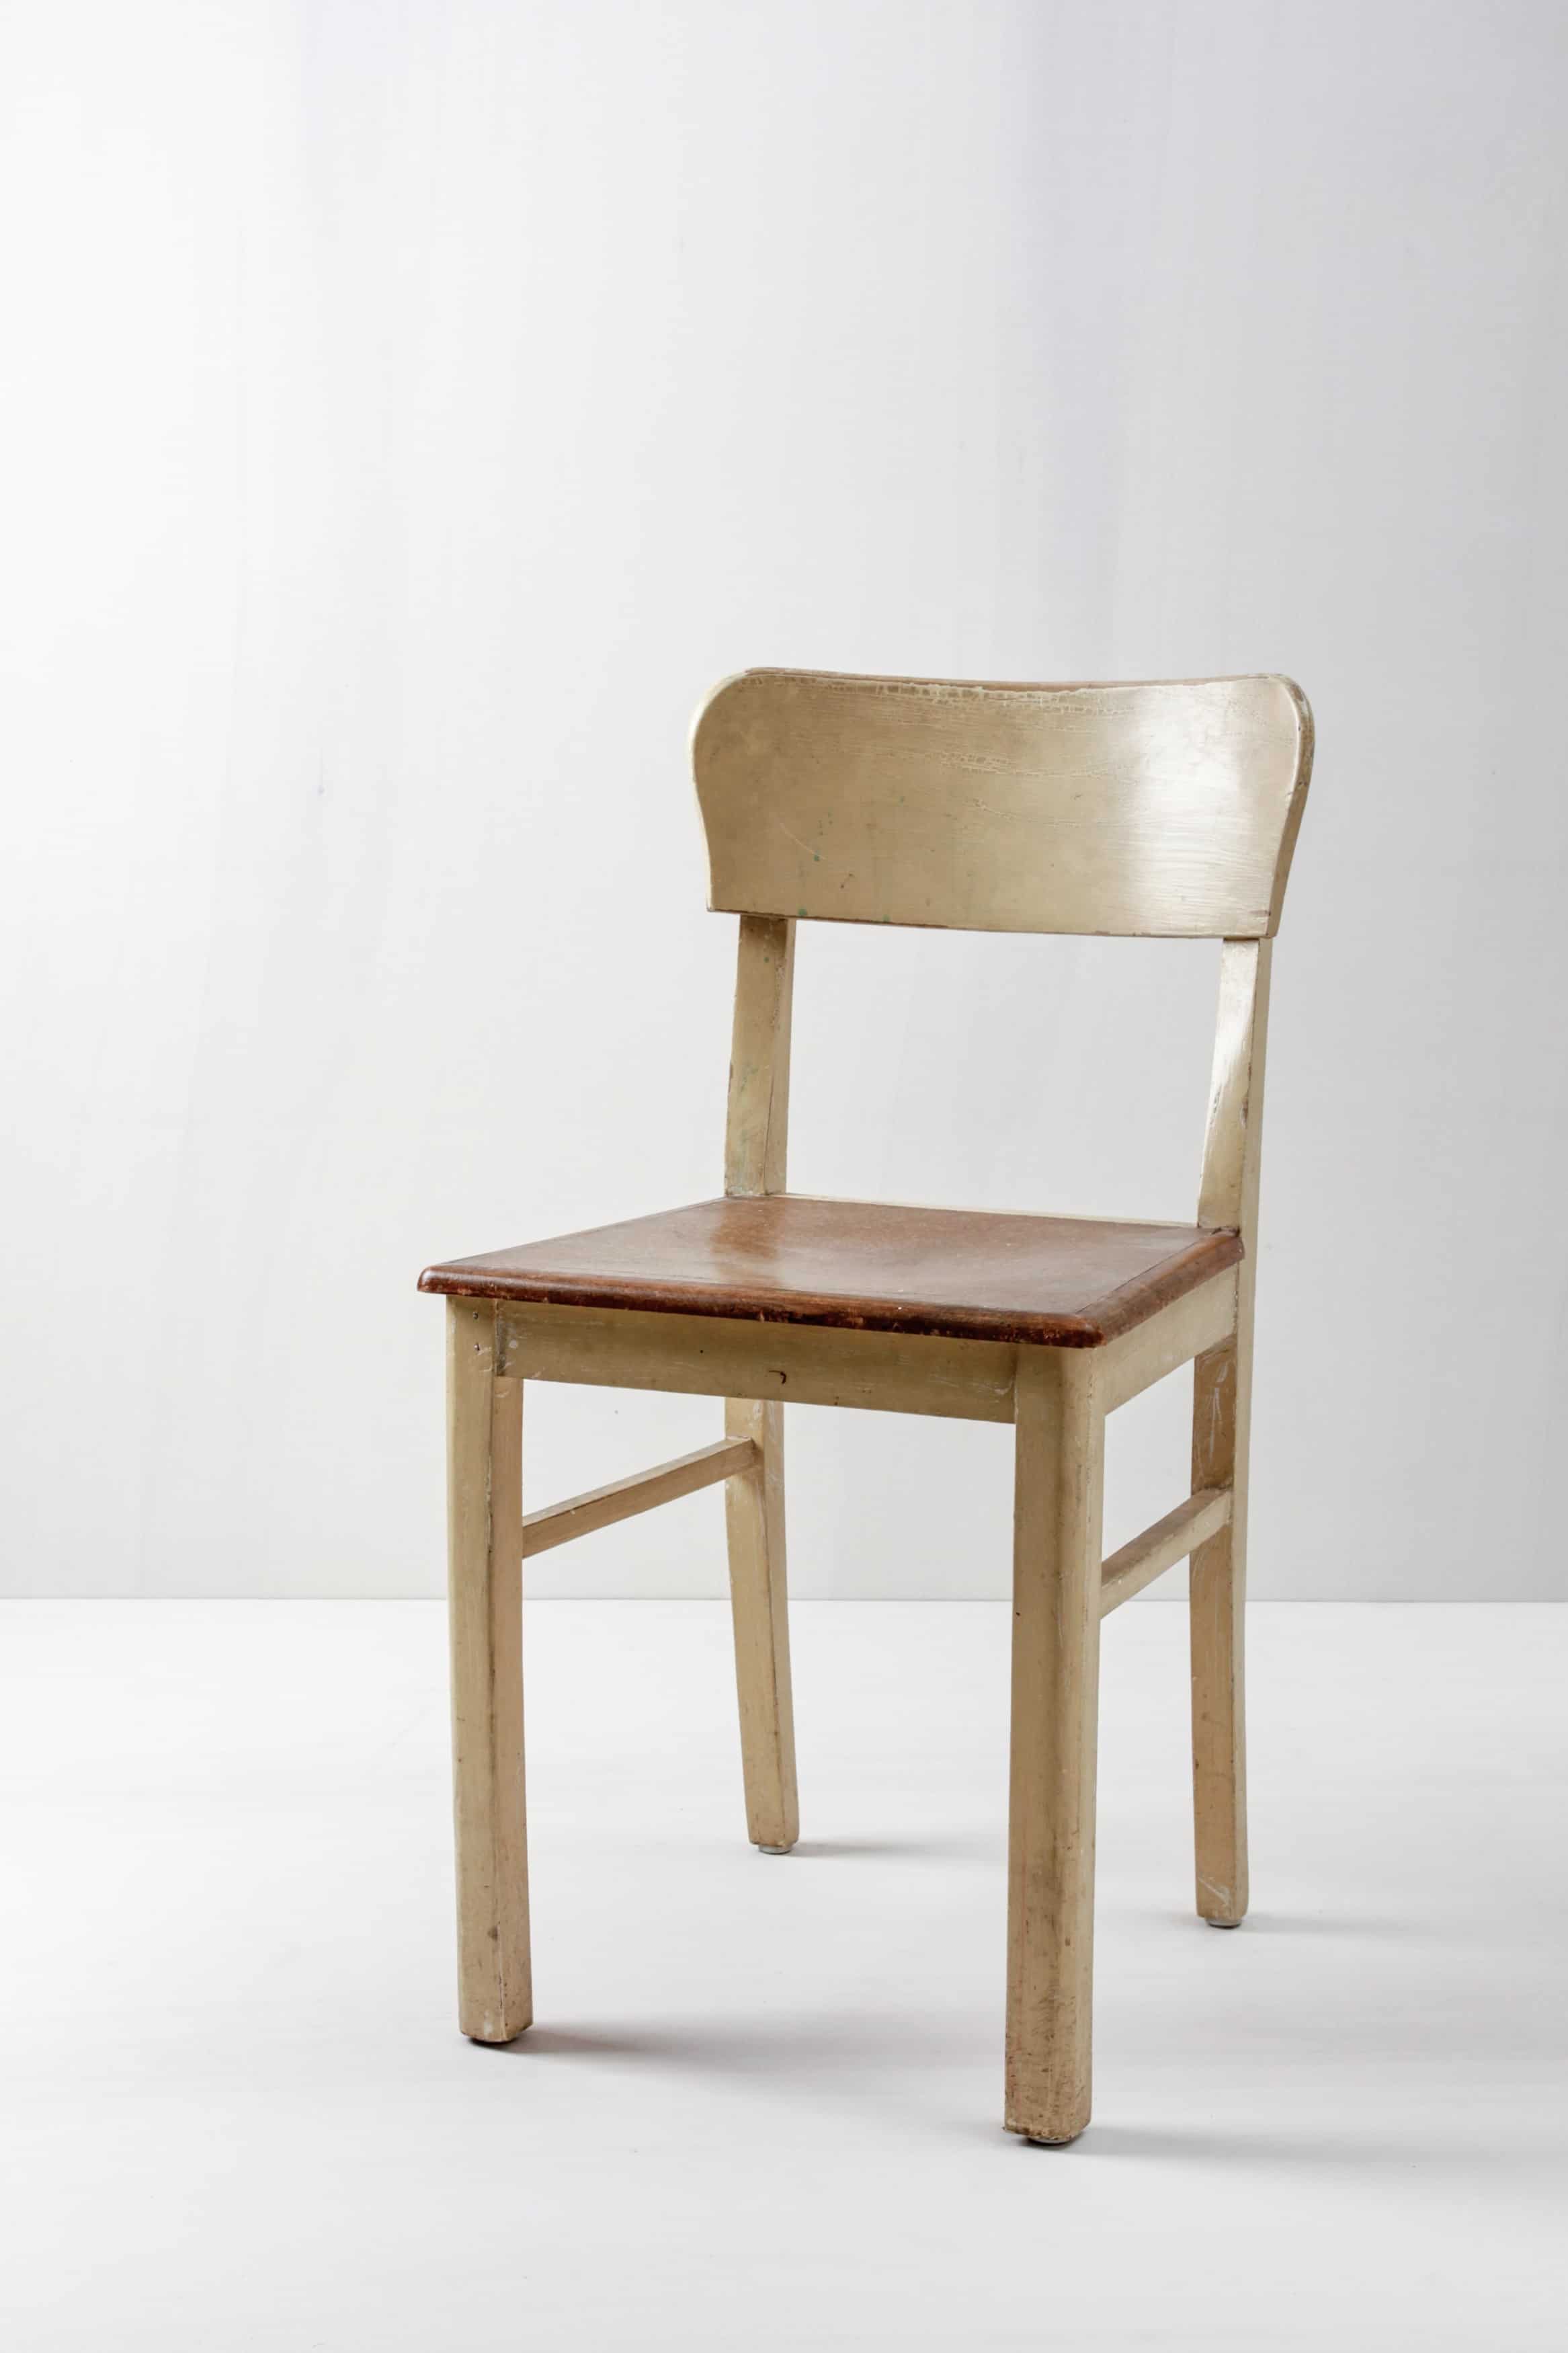 Bauhaus chairs for rent, Berlin, Hamburg & Cologne